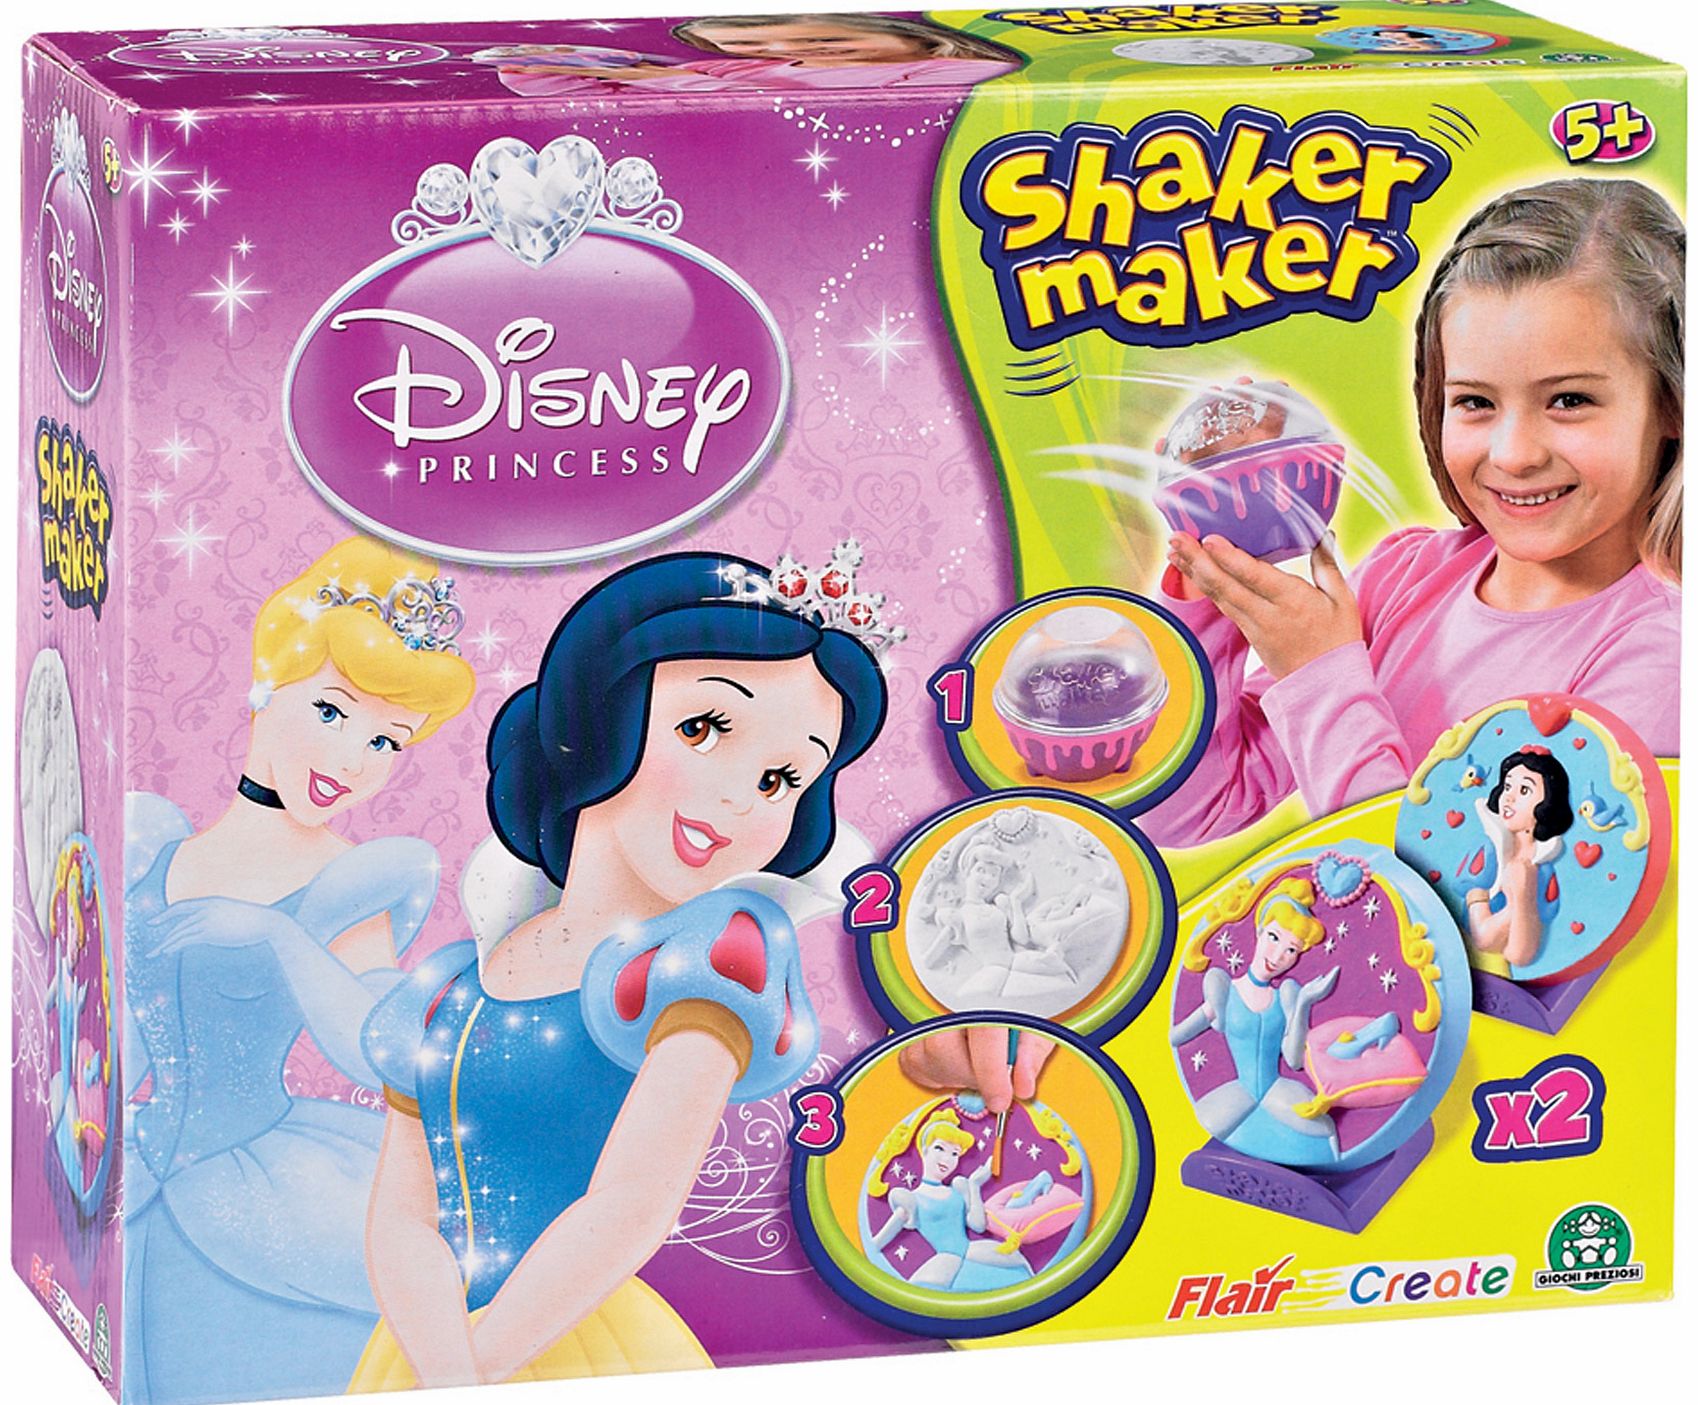 Disney Princess Shaker Maker - Cinderella & Snow